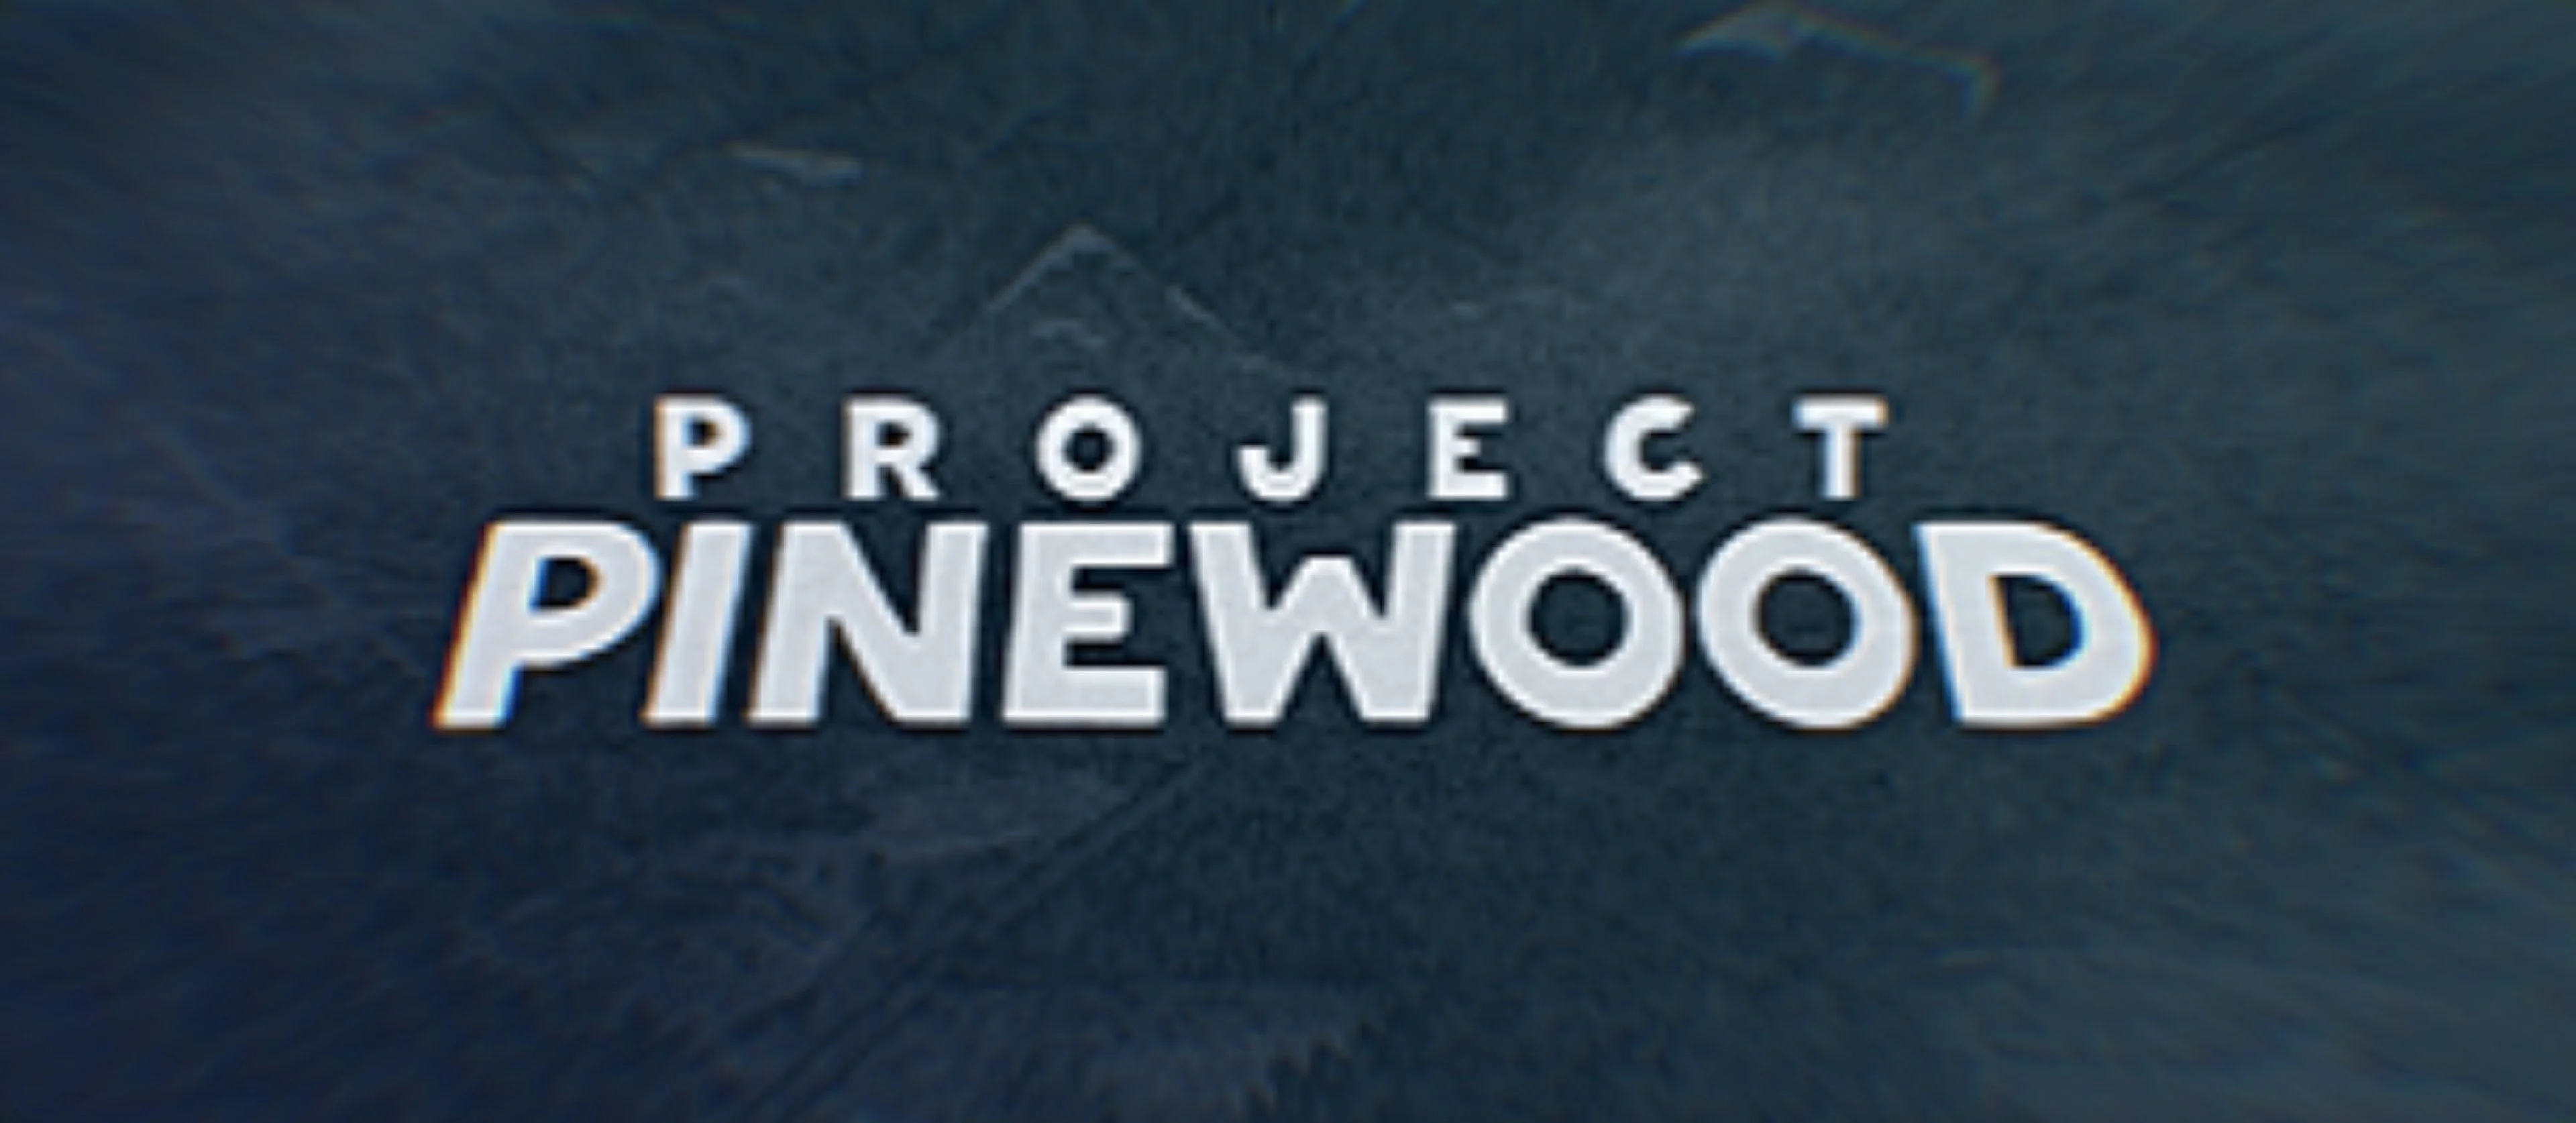 Project Pinewood main image